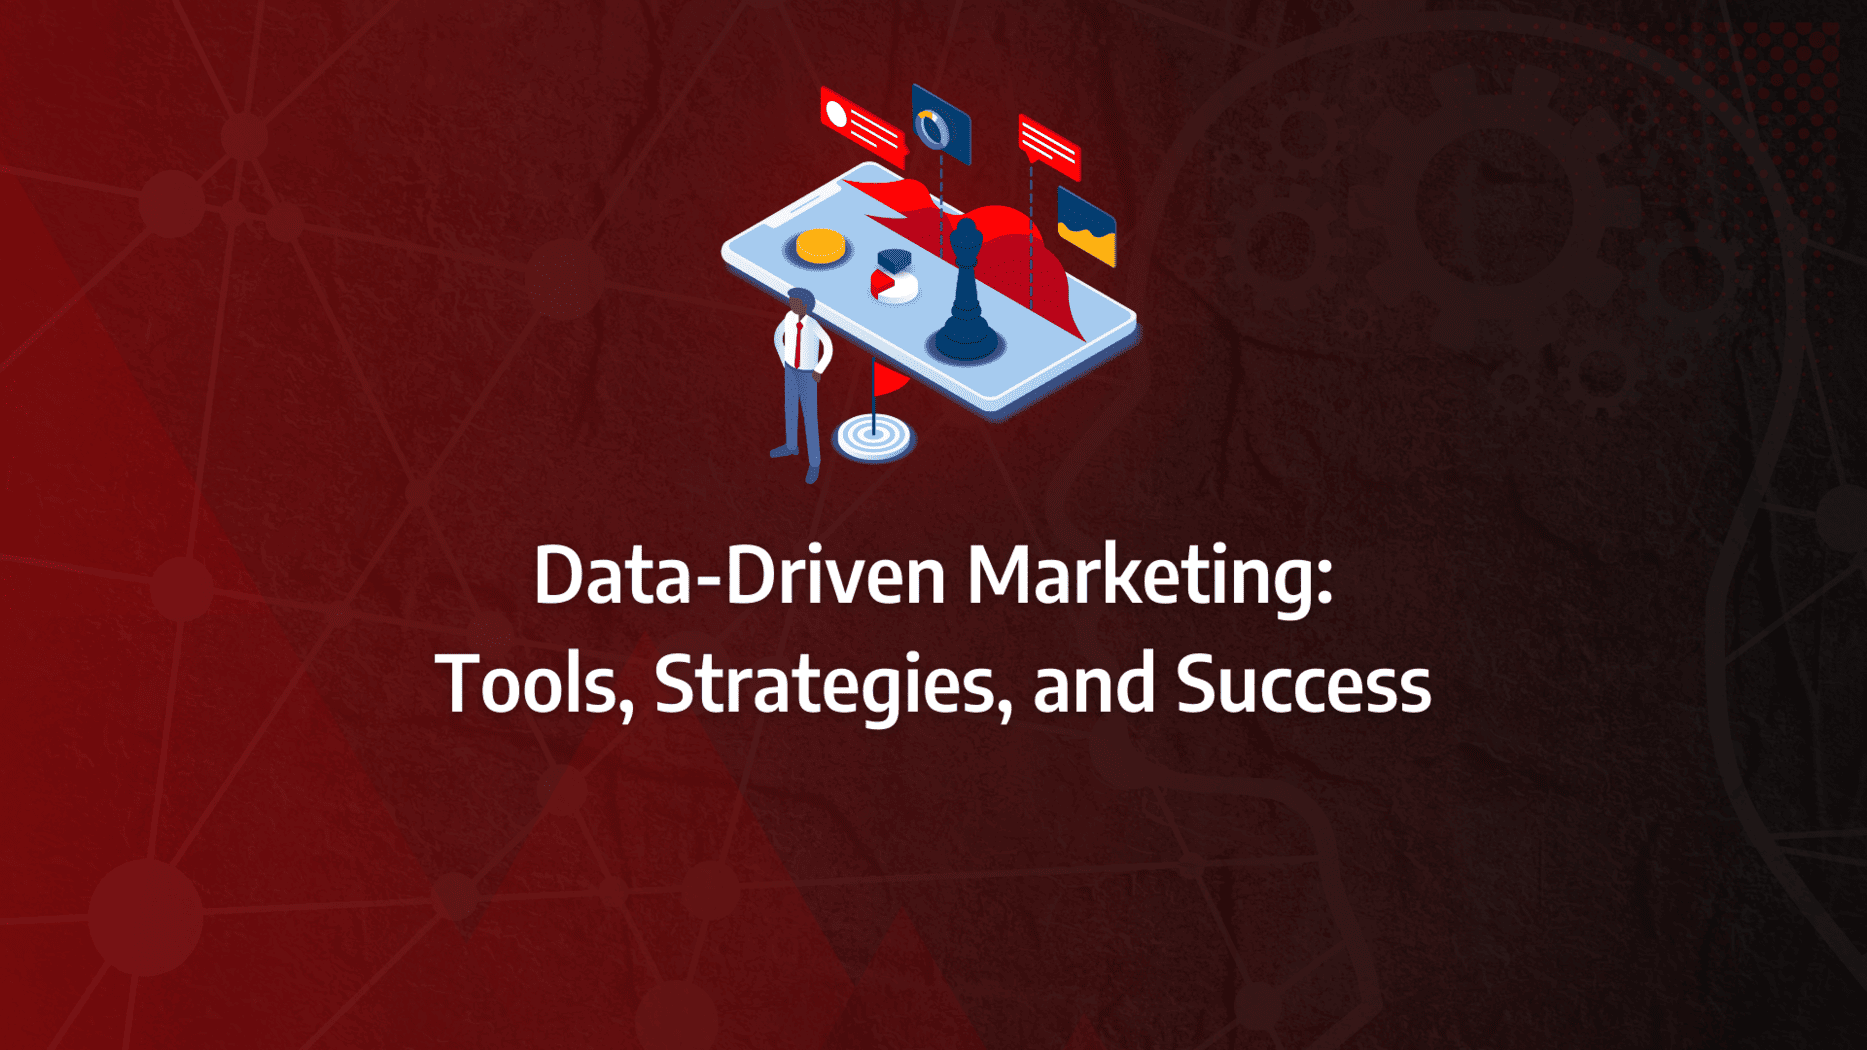 Data-Driven Marketing: Tools, Strategies, and Success